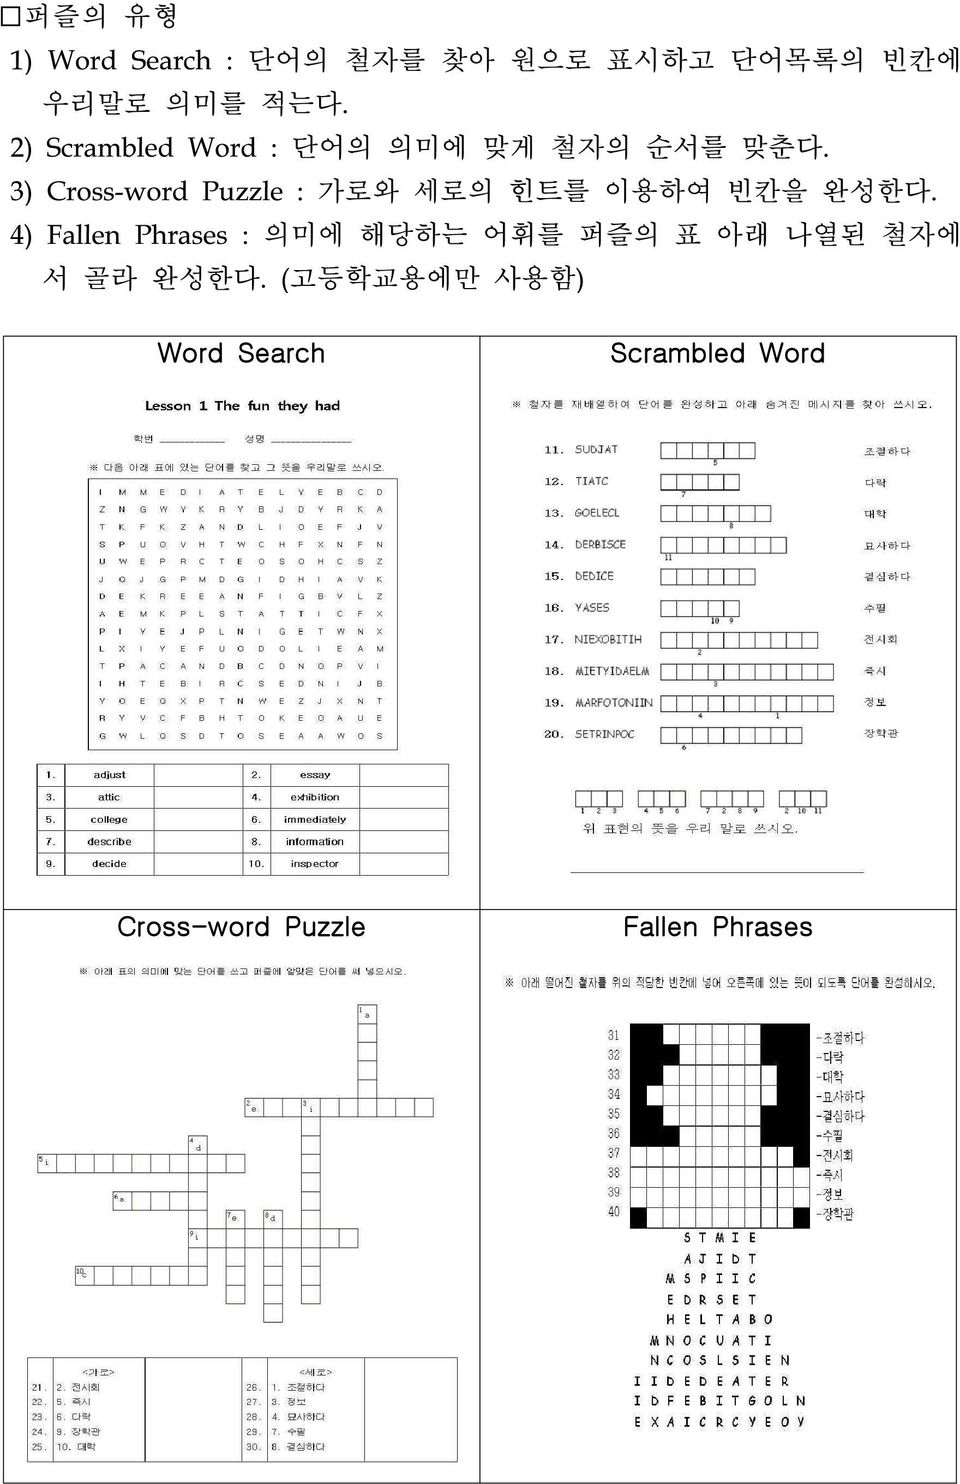 3) Cross-word Puzzle : 가로와 세로의 힌트를 이용하여 빈칸을 완성한다.